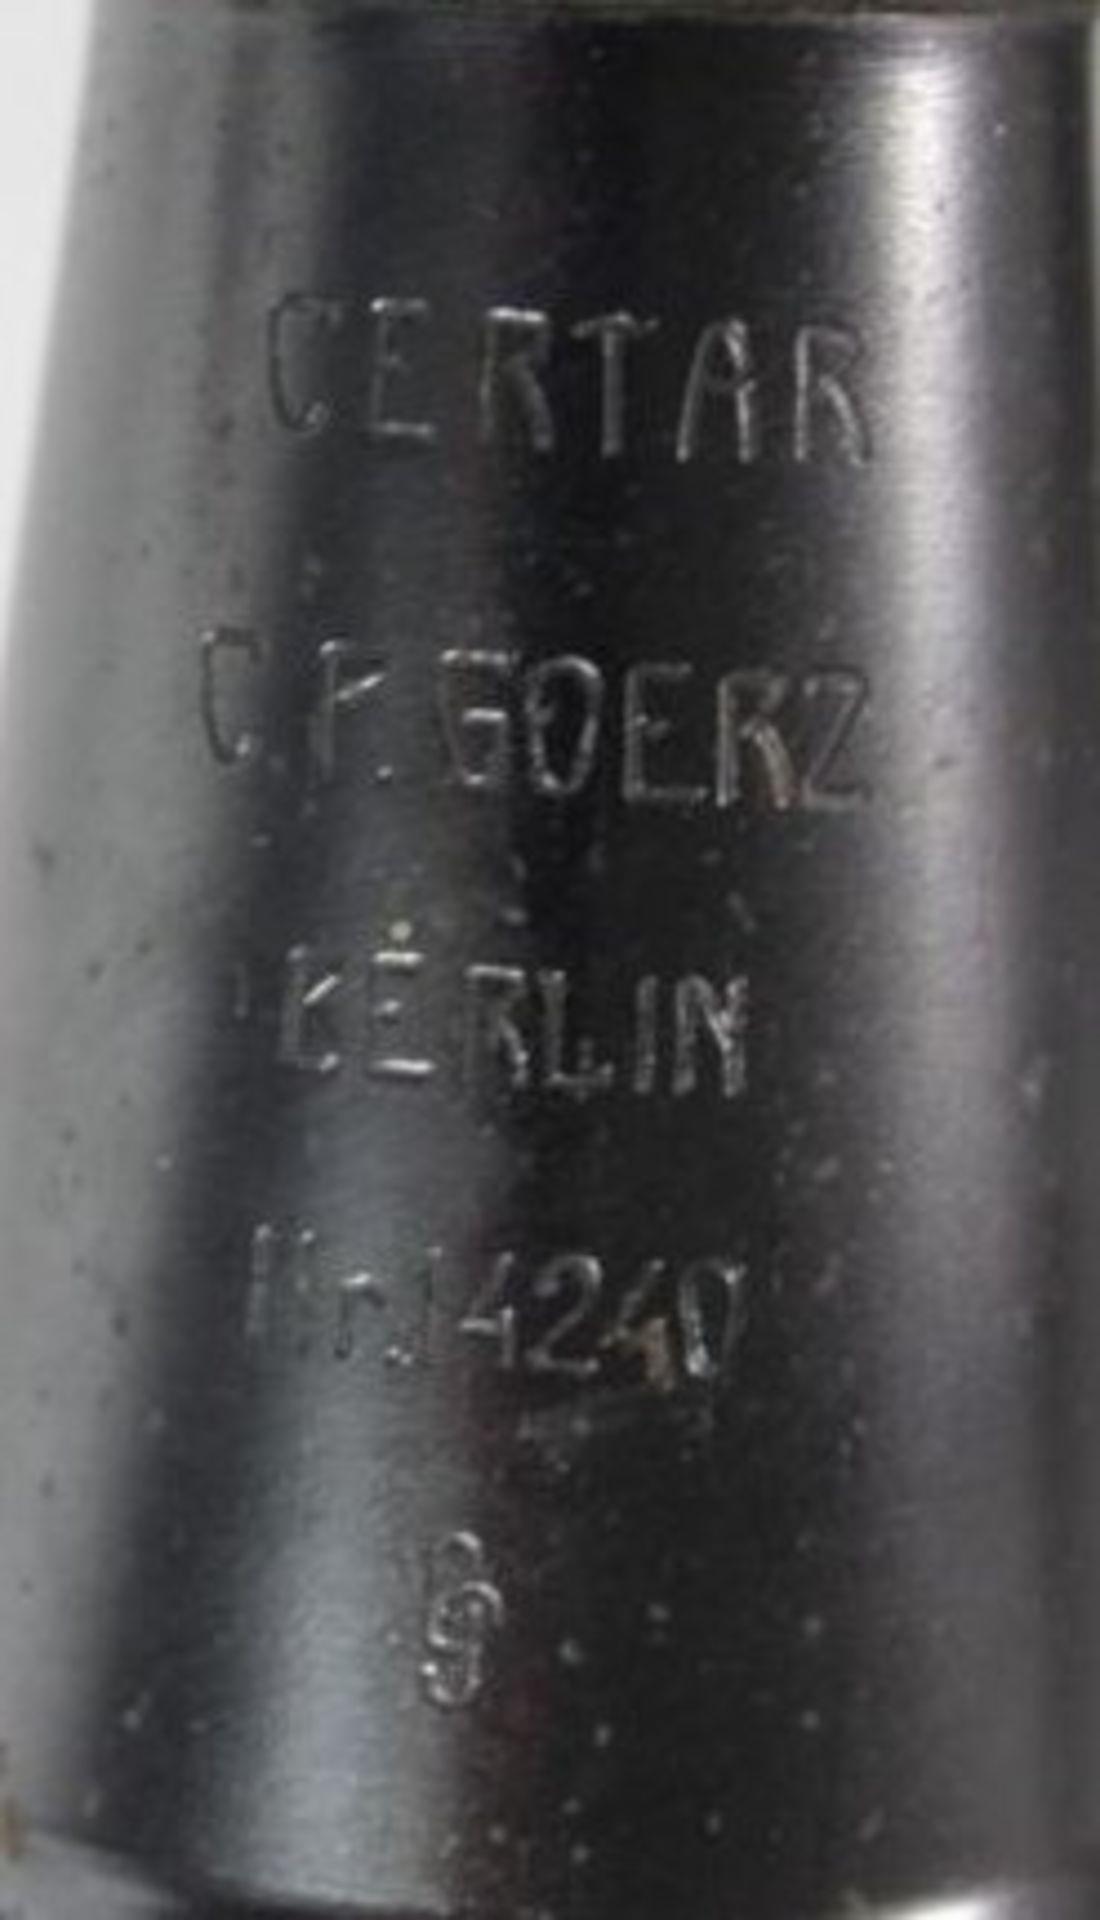 Zilefernrohr, Certar, C.P.Goertz Berlin, Nr. 14240, Optik ok, L-30cm. - Image 2 of 2